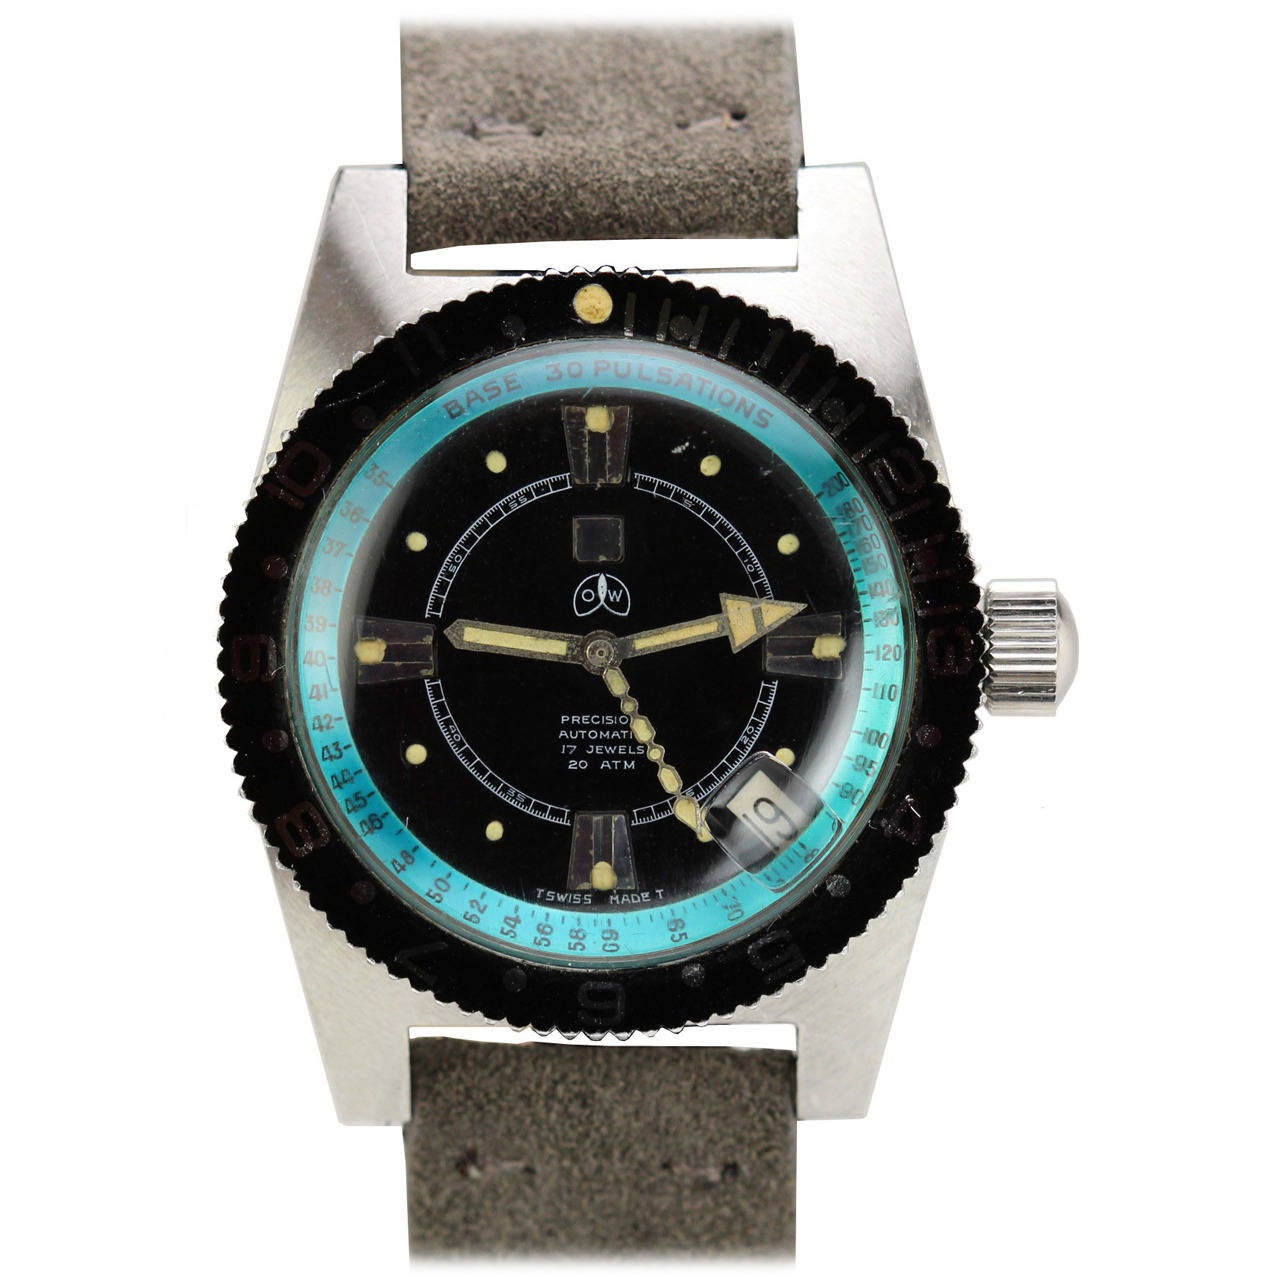 Ollech & Wajs Stainless Steel Diver's Wristwatch